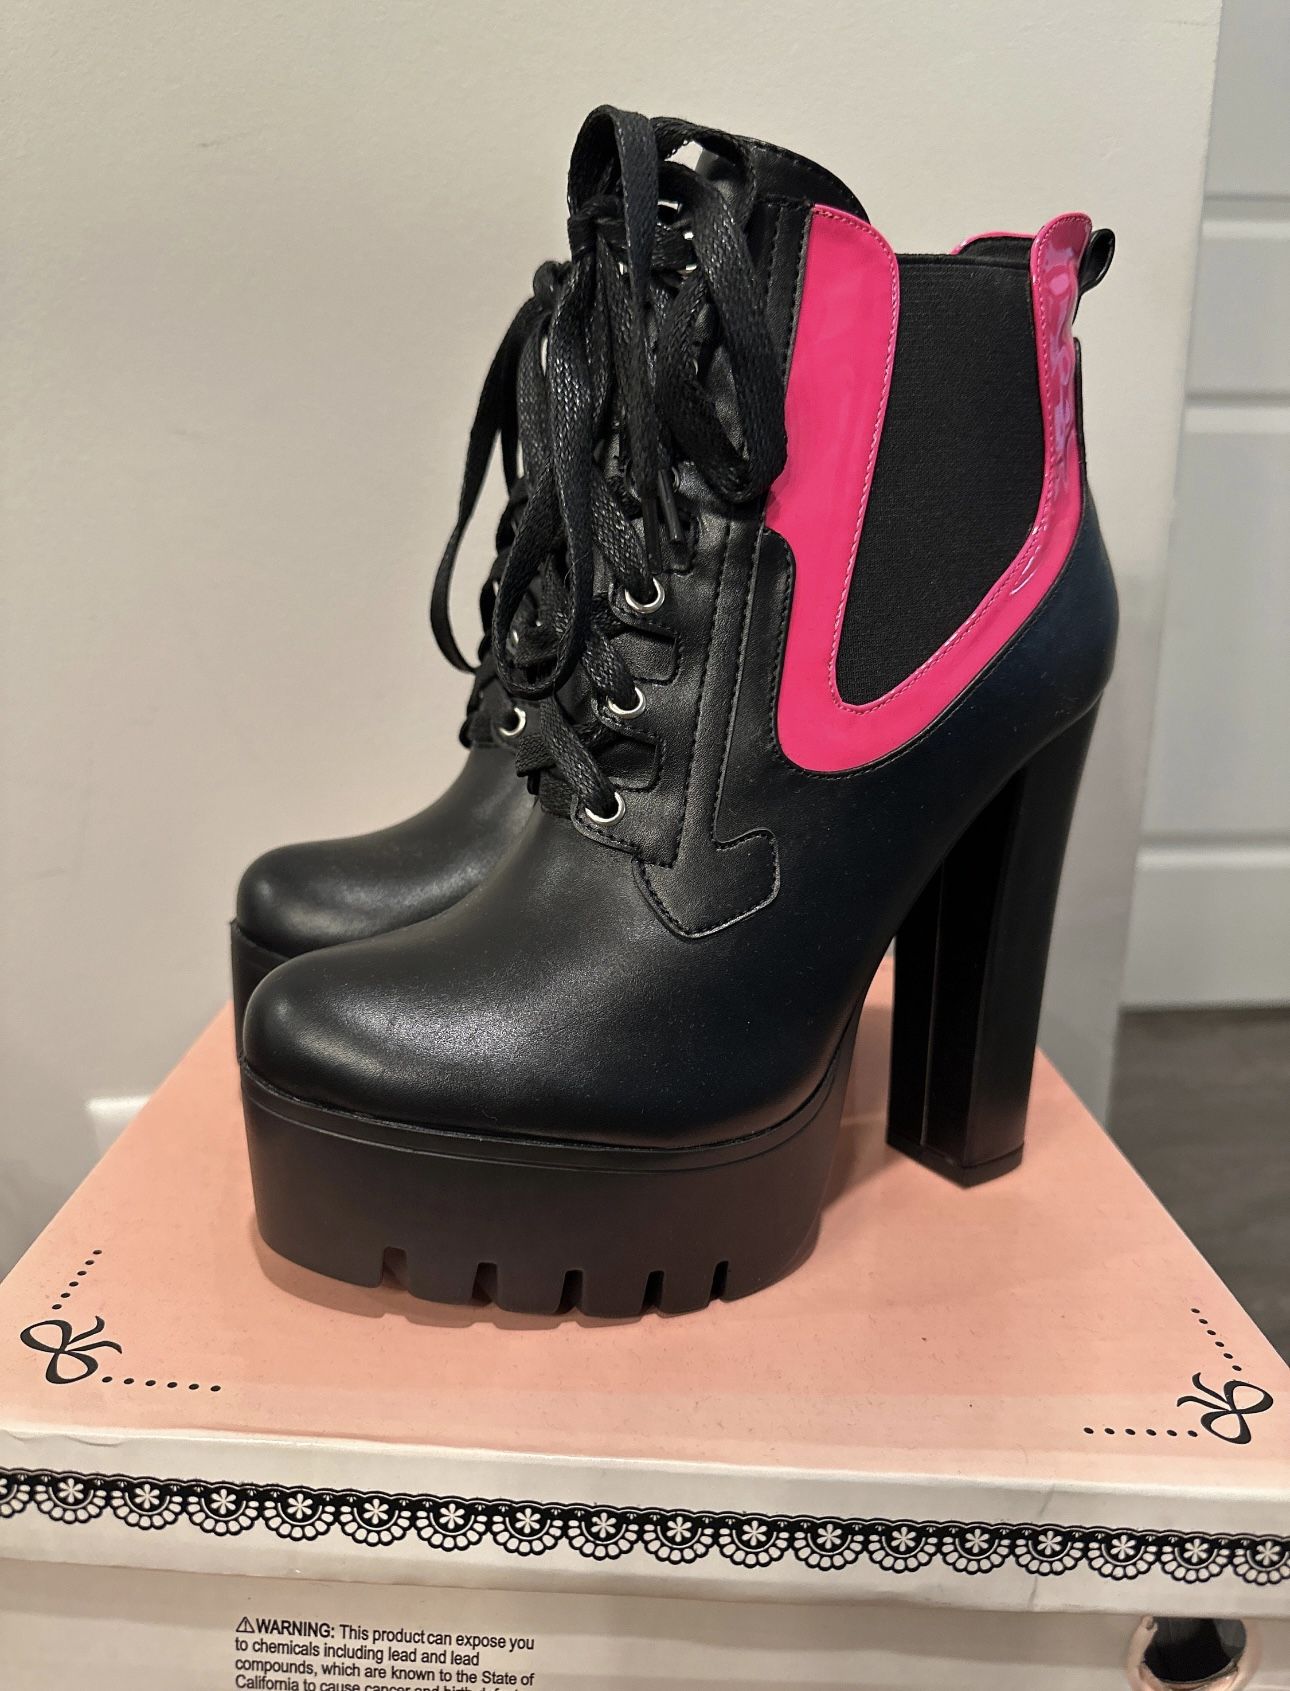 Women’s Heel Combat Boot Size 7-10 available